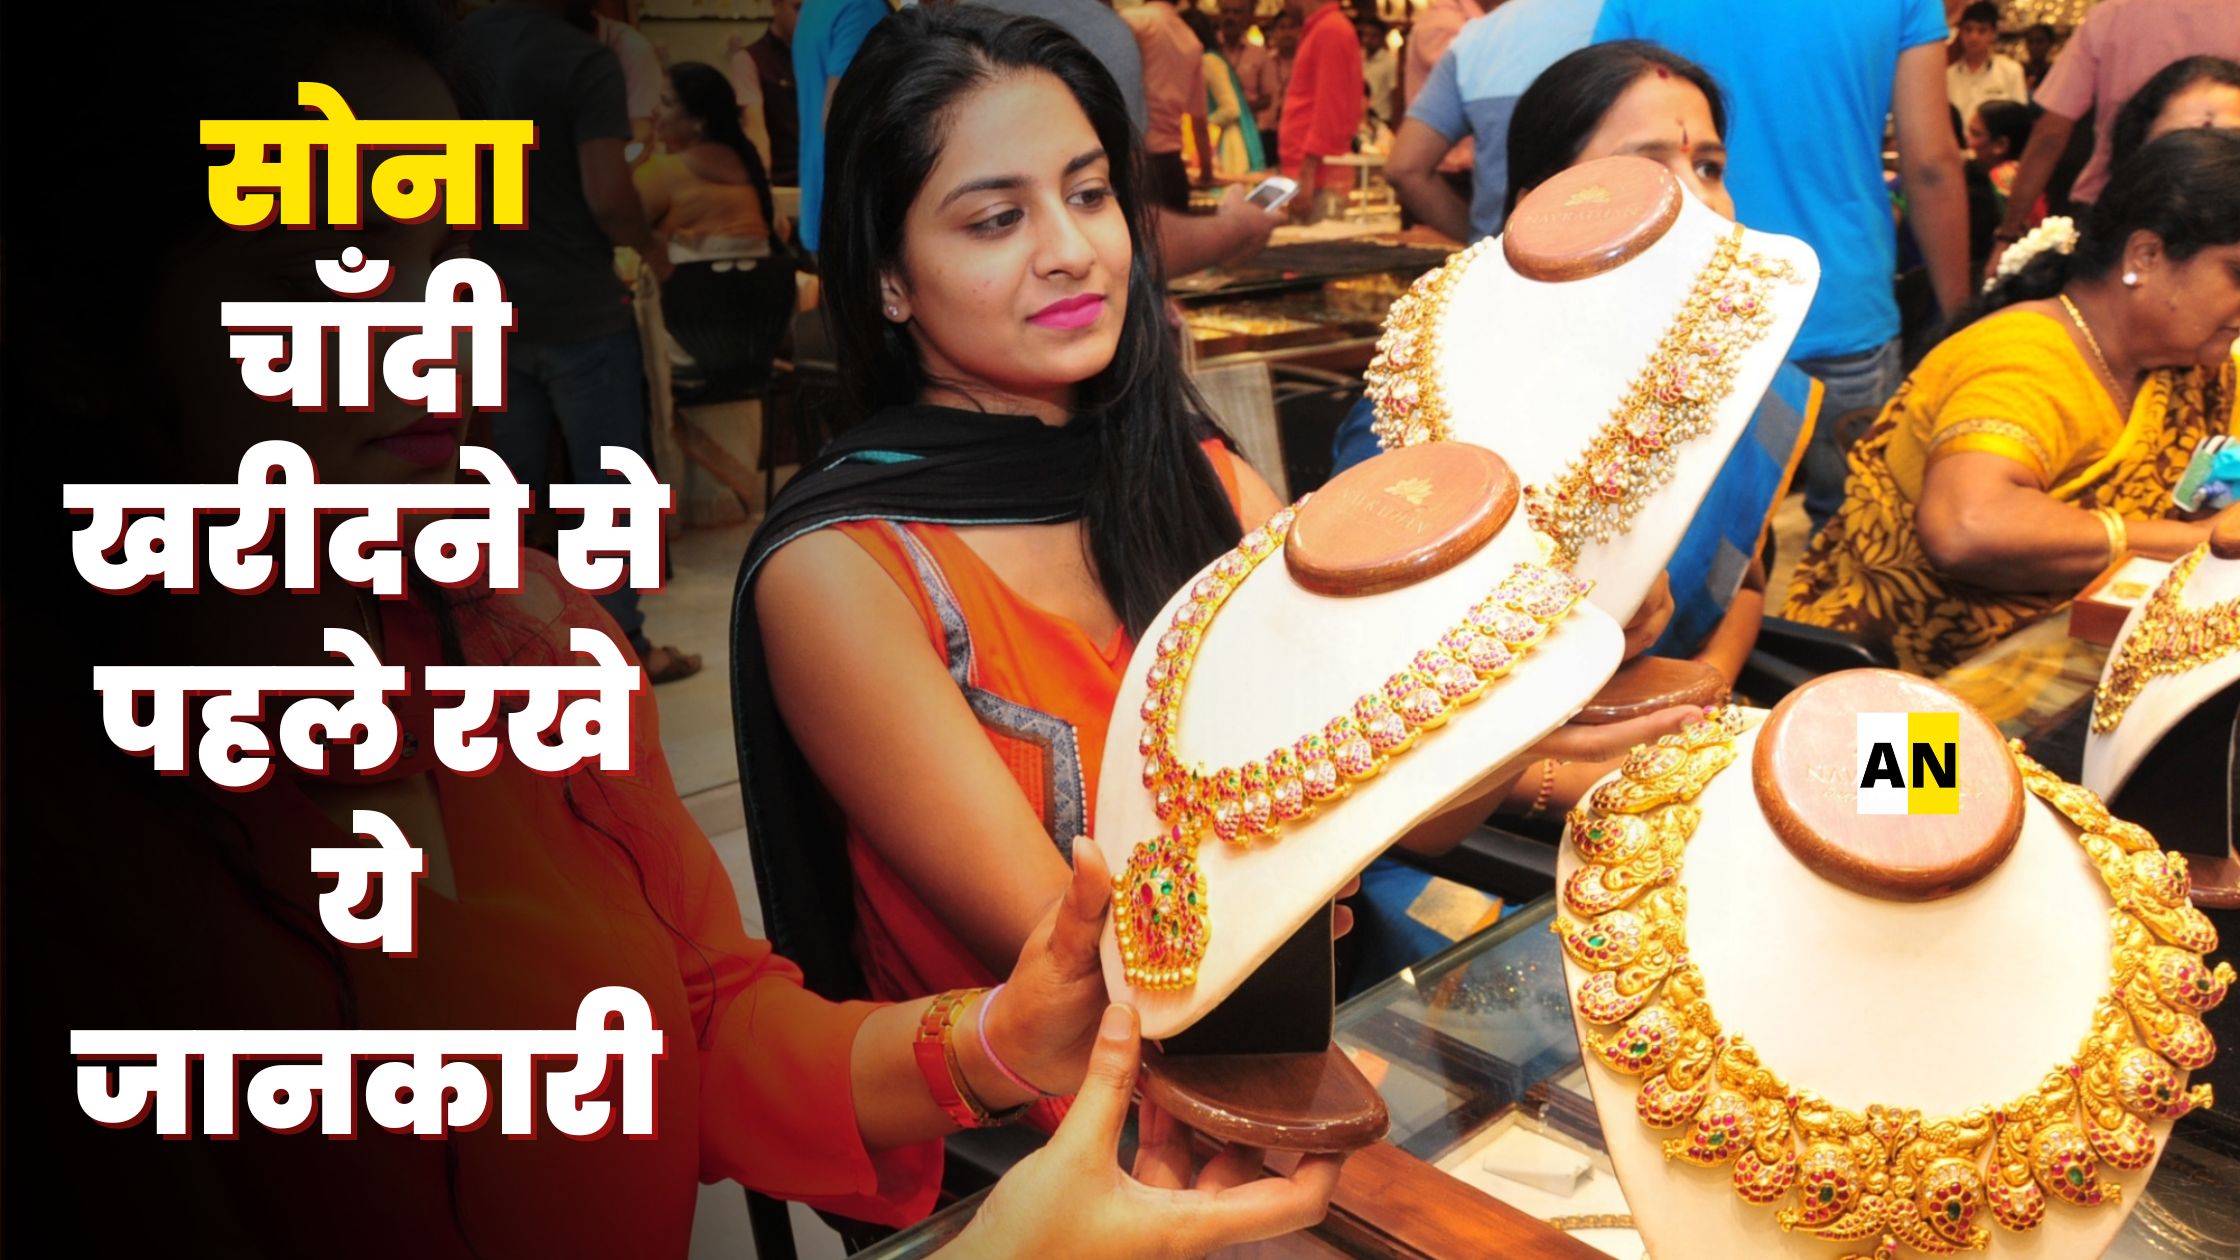 take precautions before buying jewelry this diwali